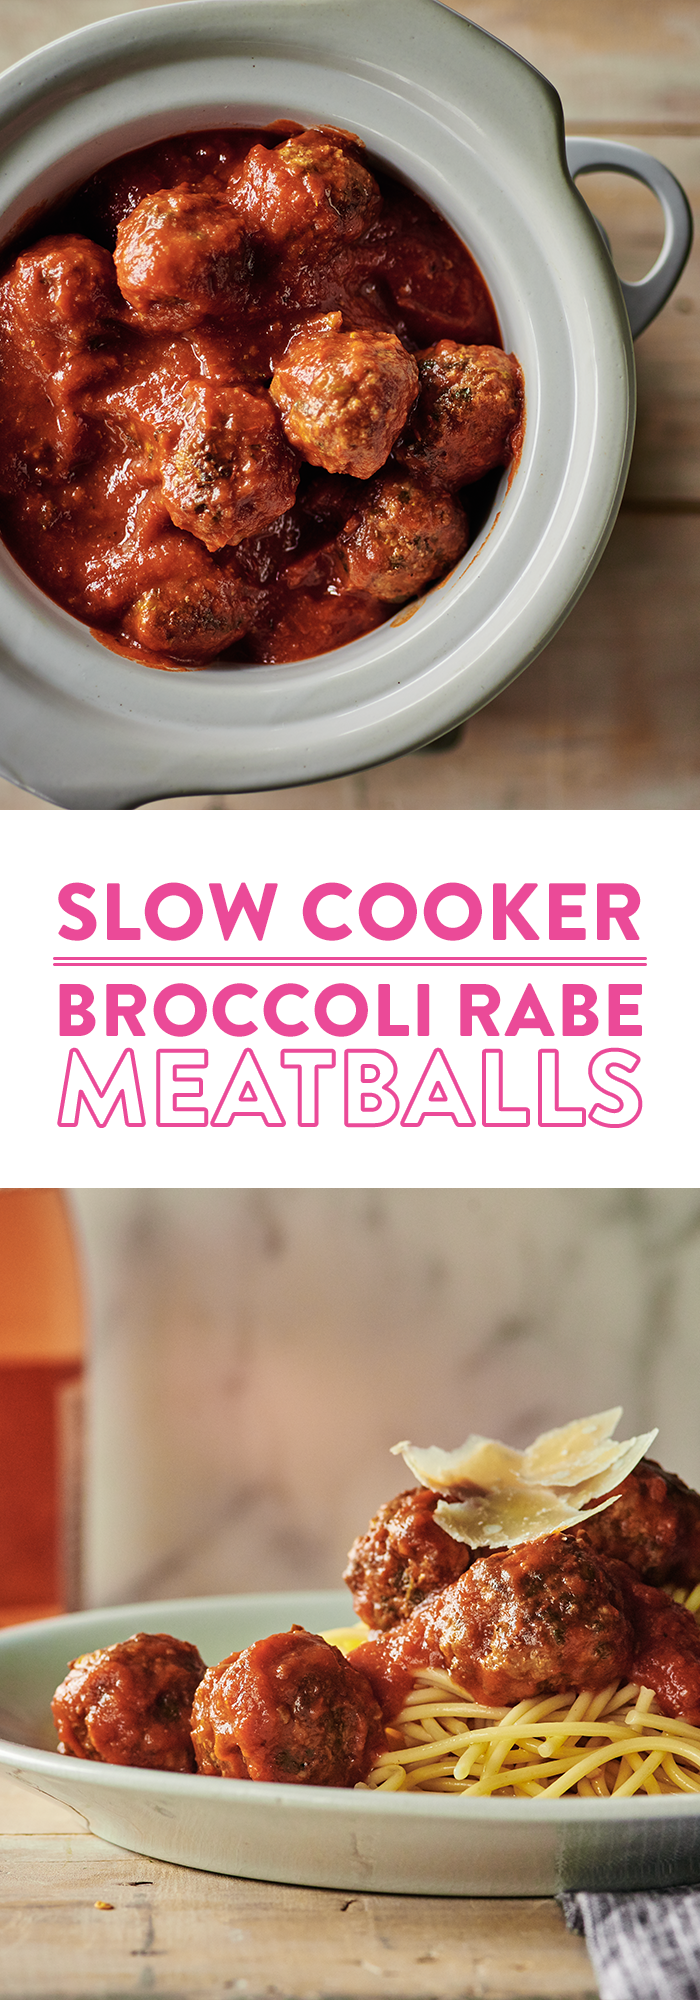 Slow Cooker Meatballs Broccoli Rabe